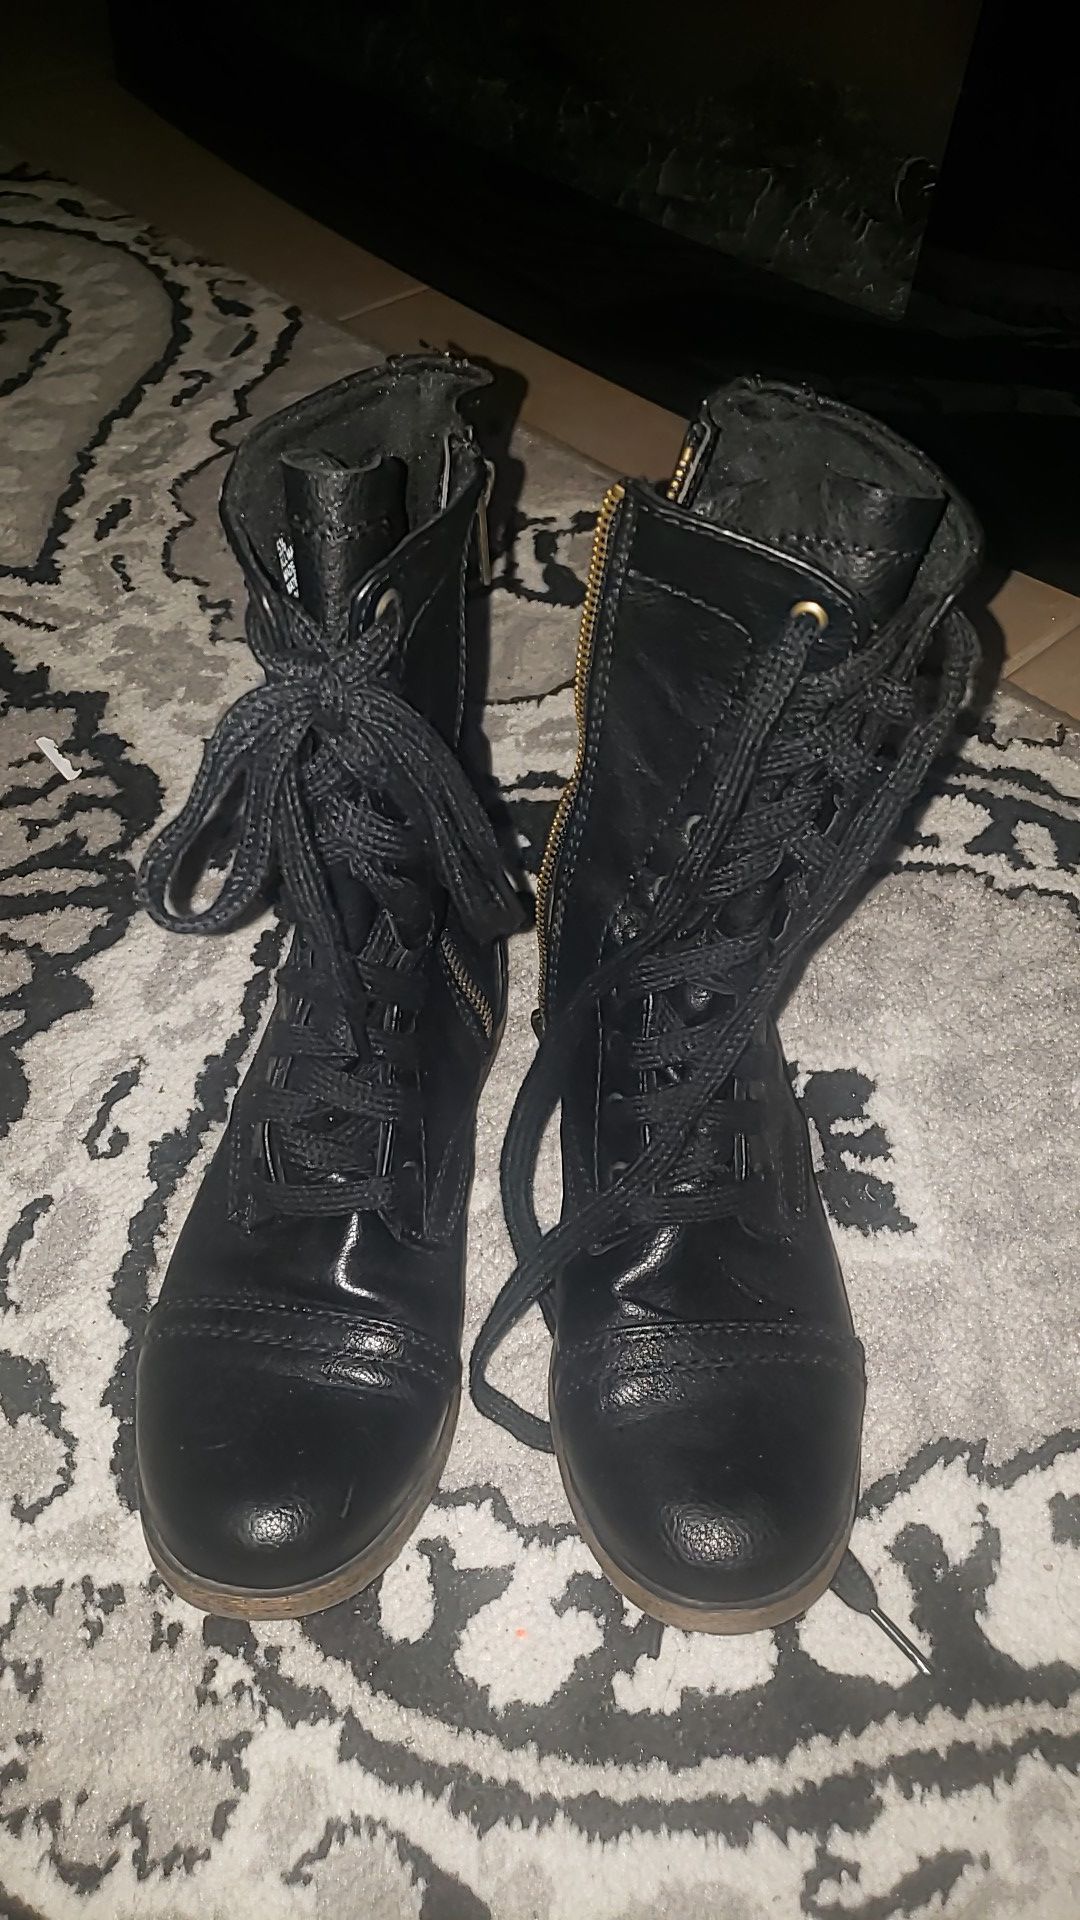 Size 5 1/2 women black boots